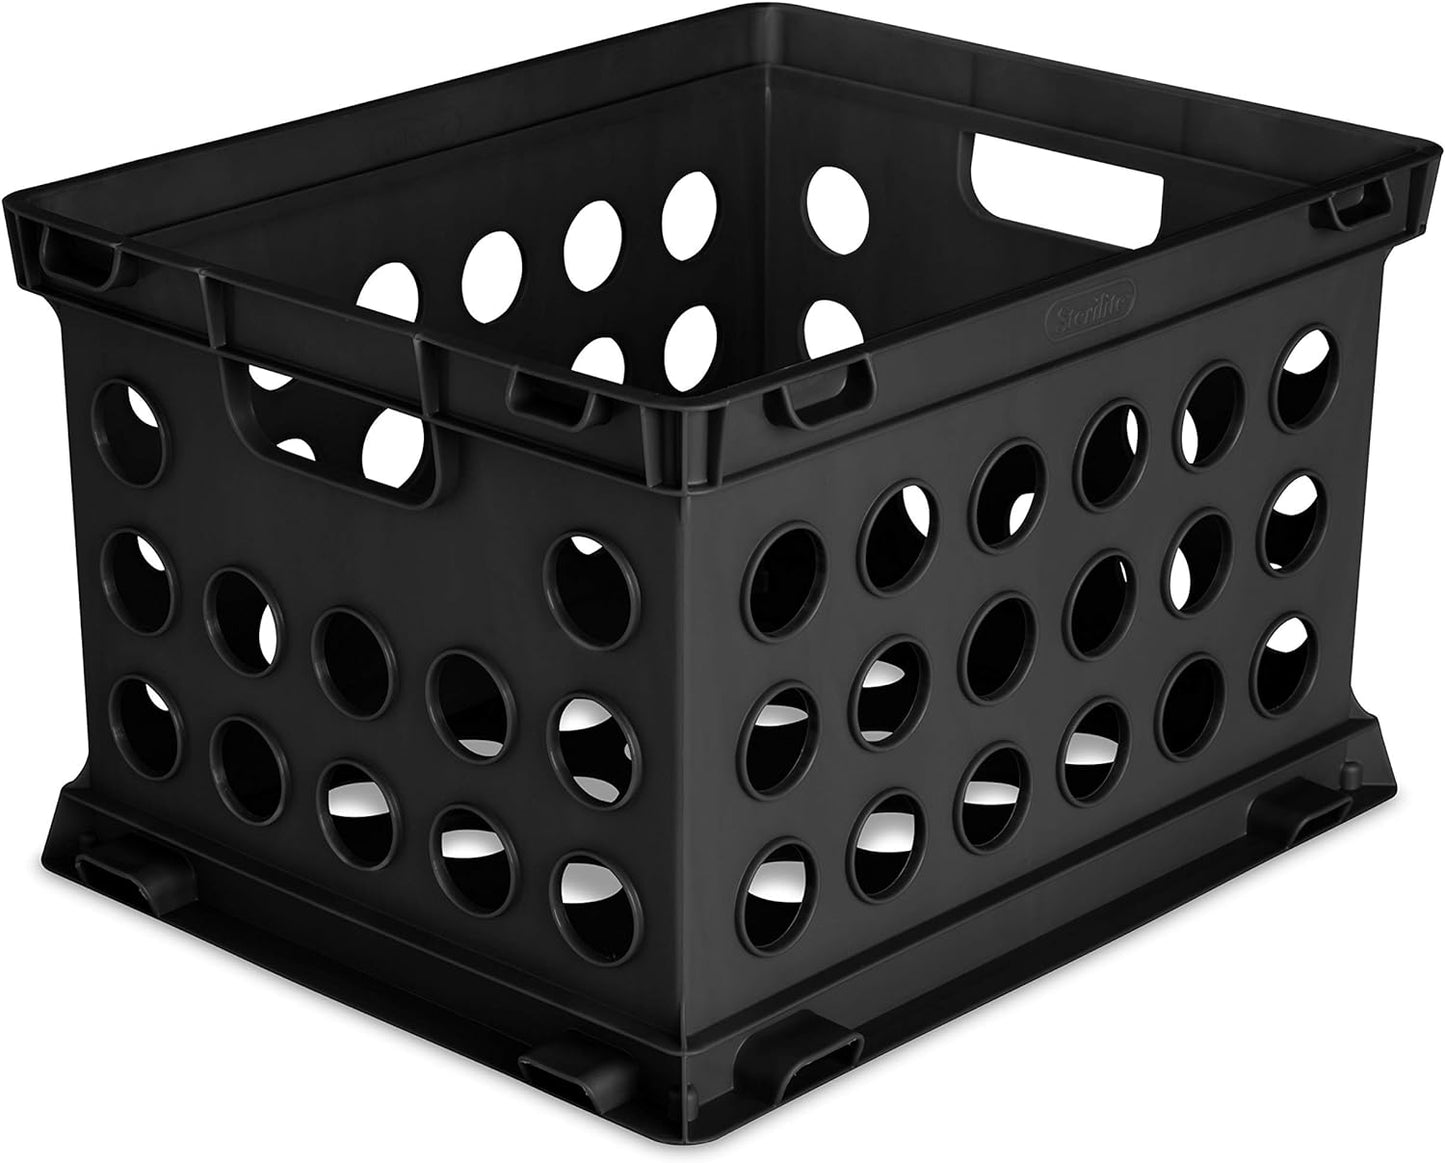 Sterilite Plastic Storage Crate, Black